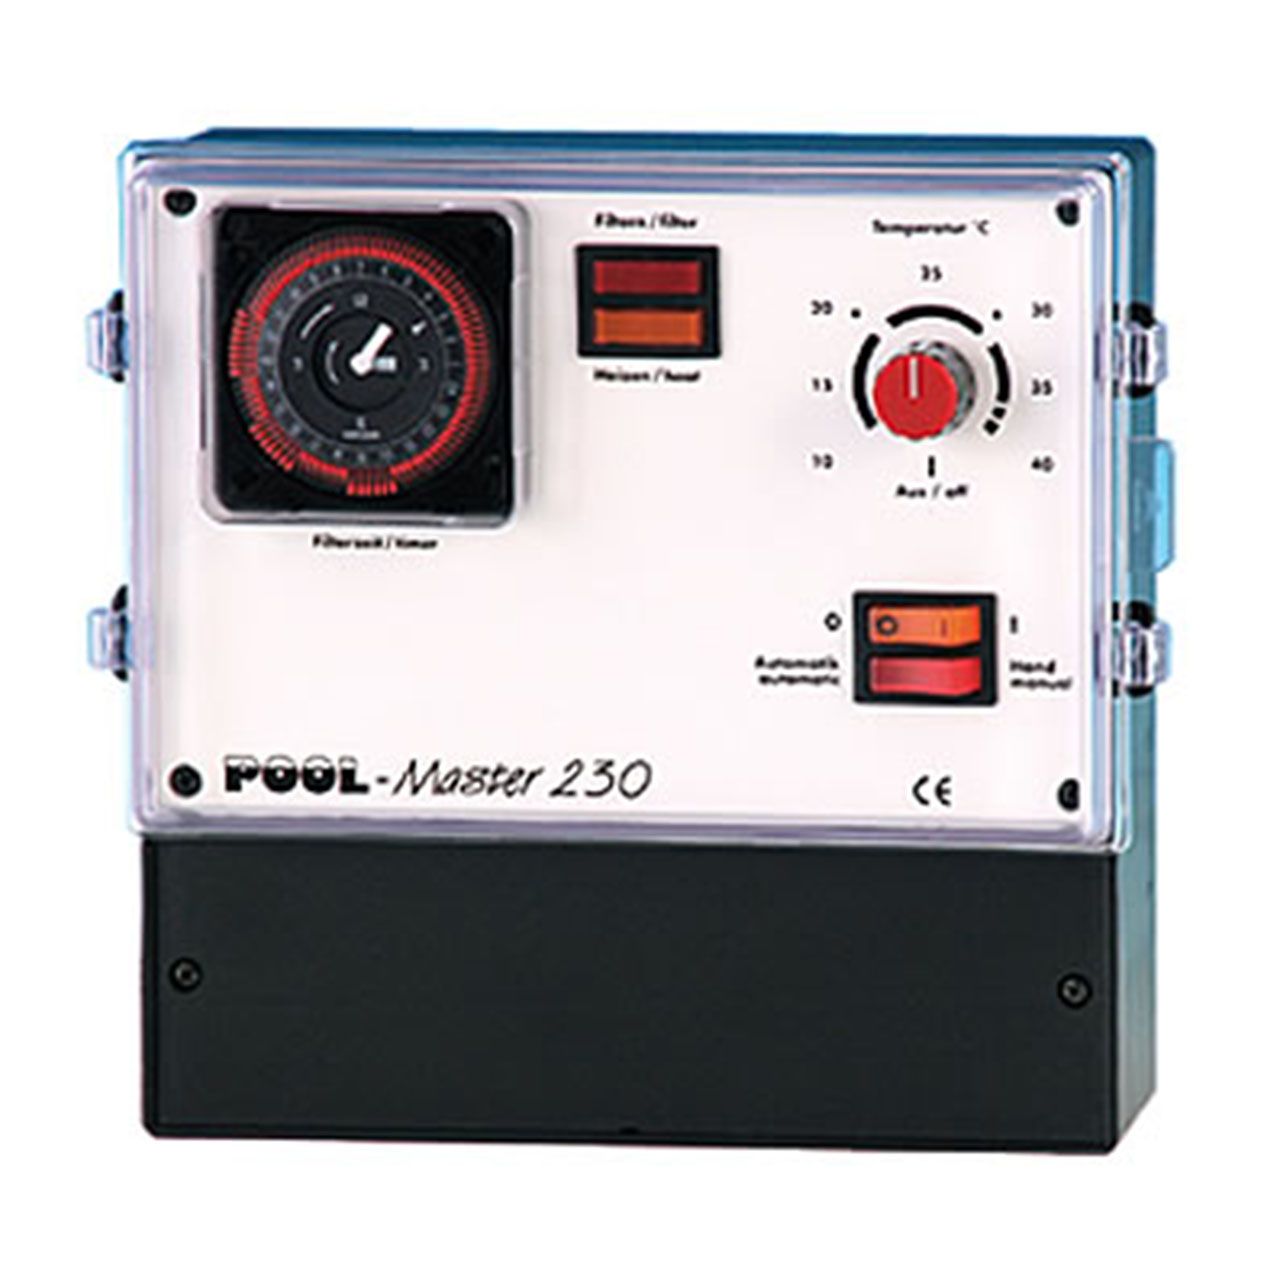 Pool Master 230 Schwimmbadsteuerung analog